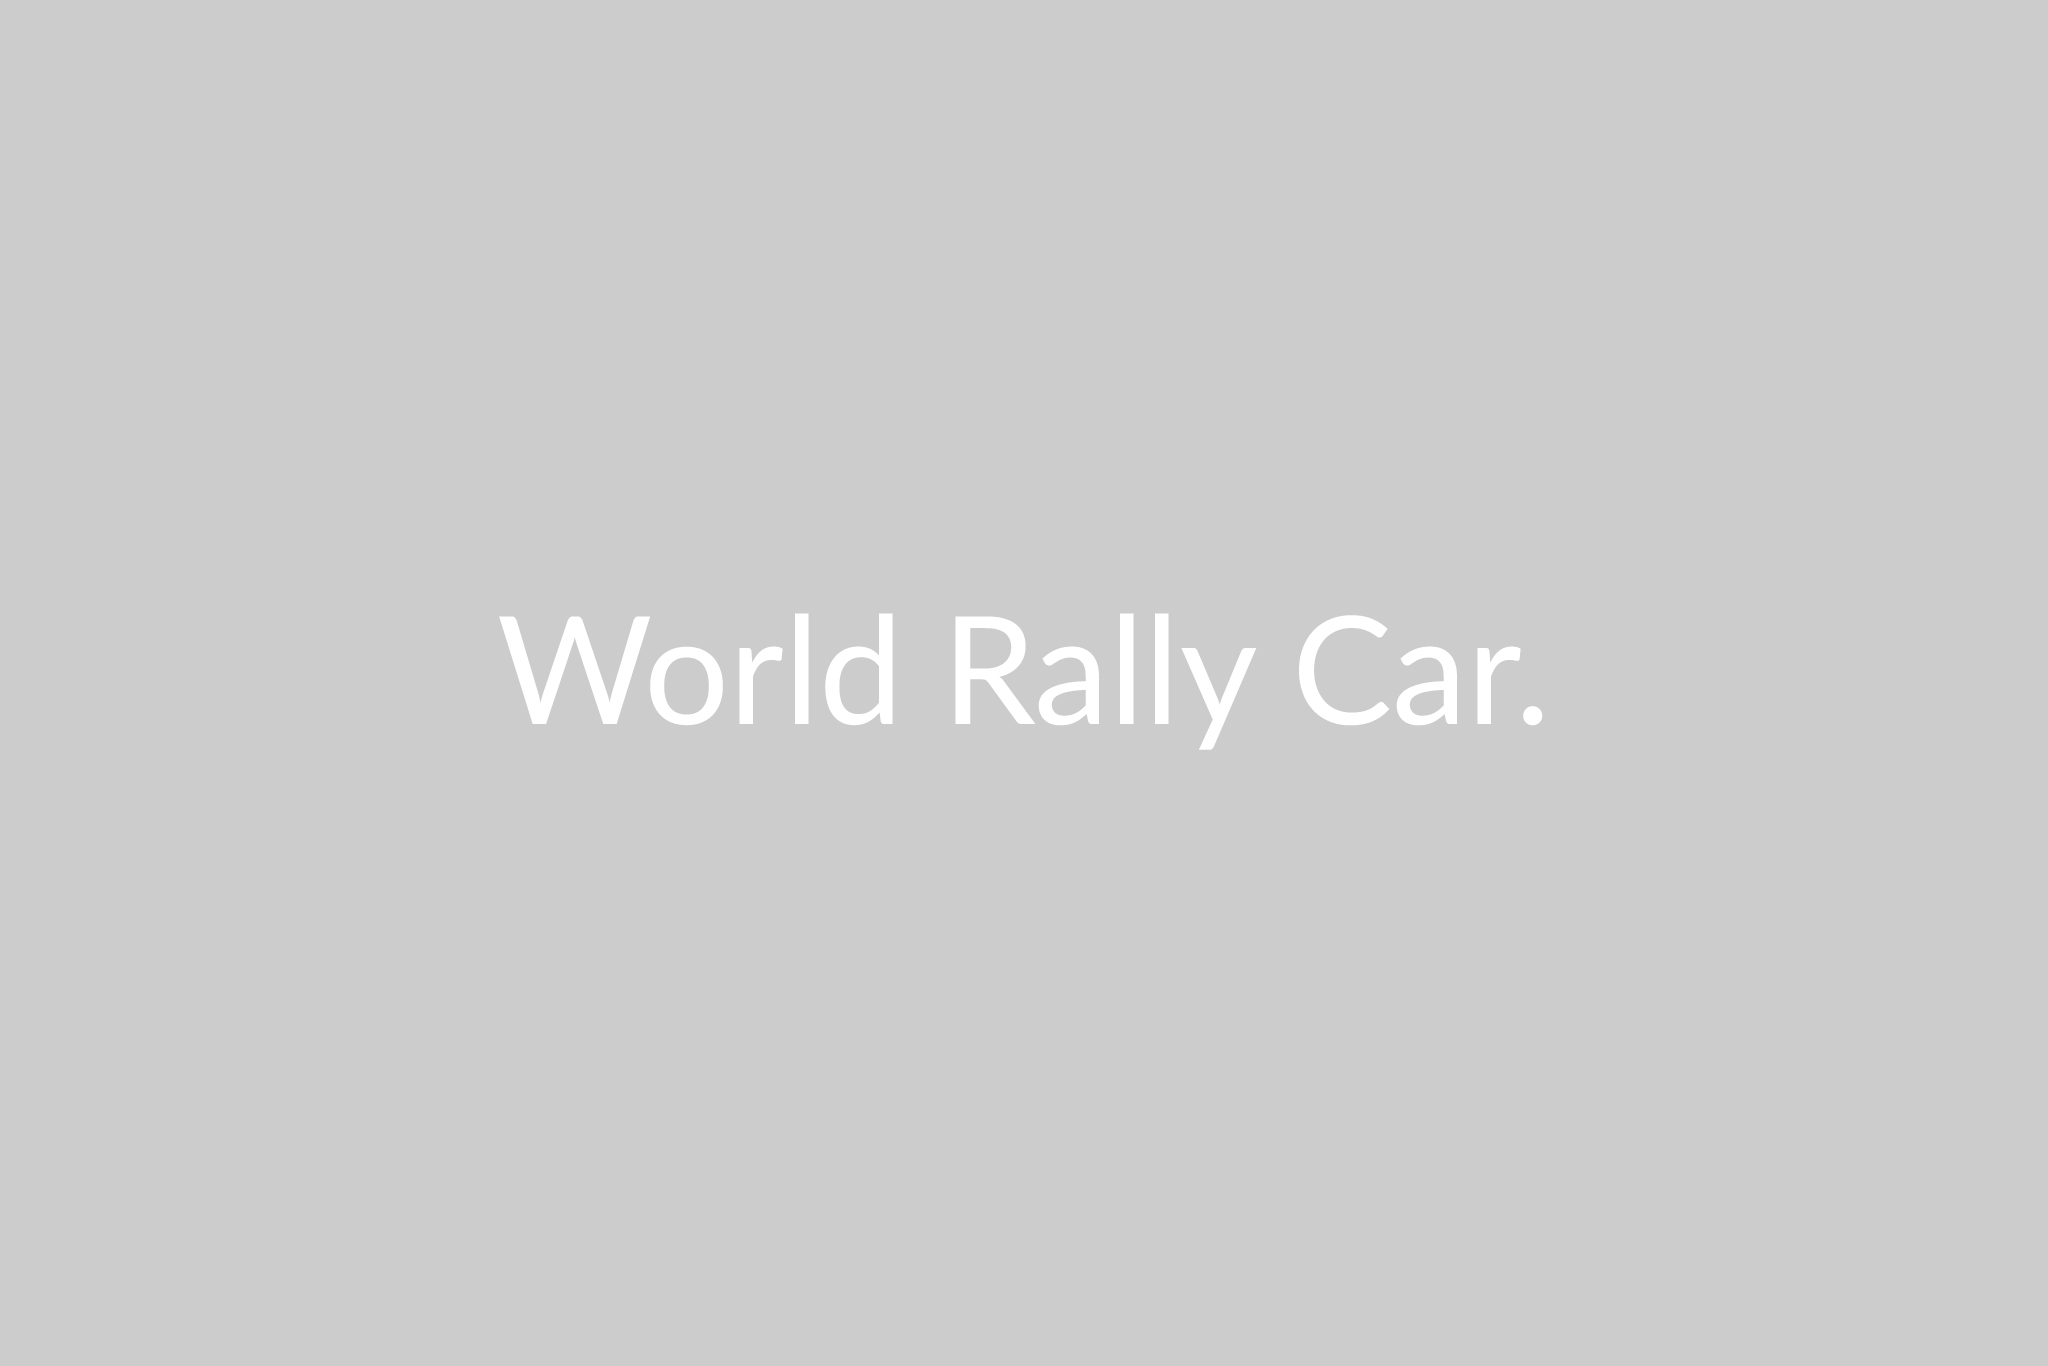  World Rally Car